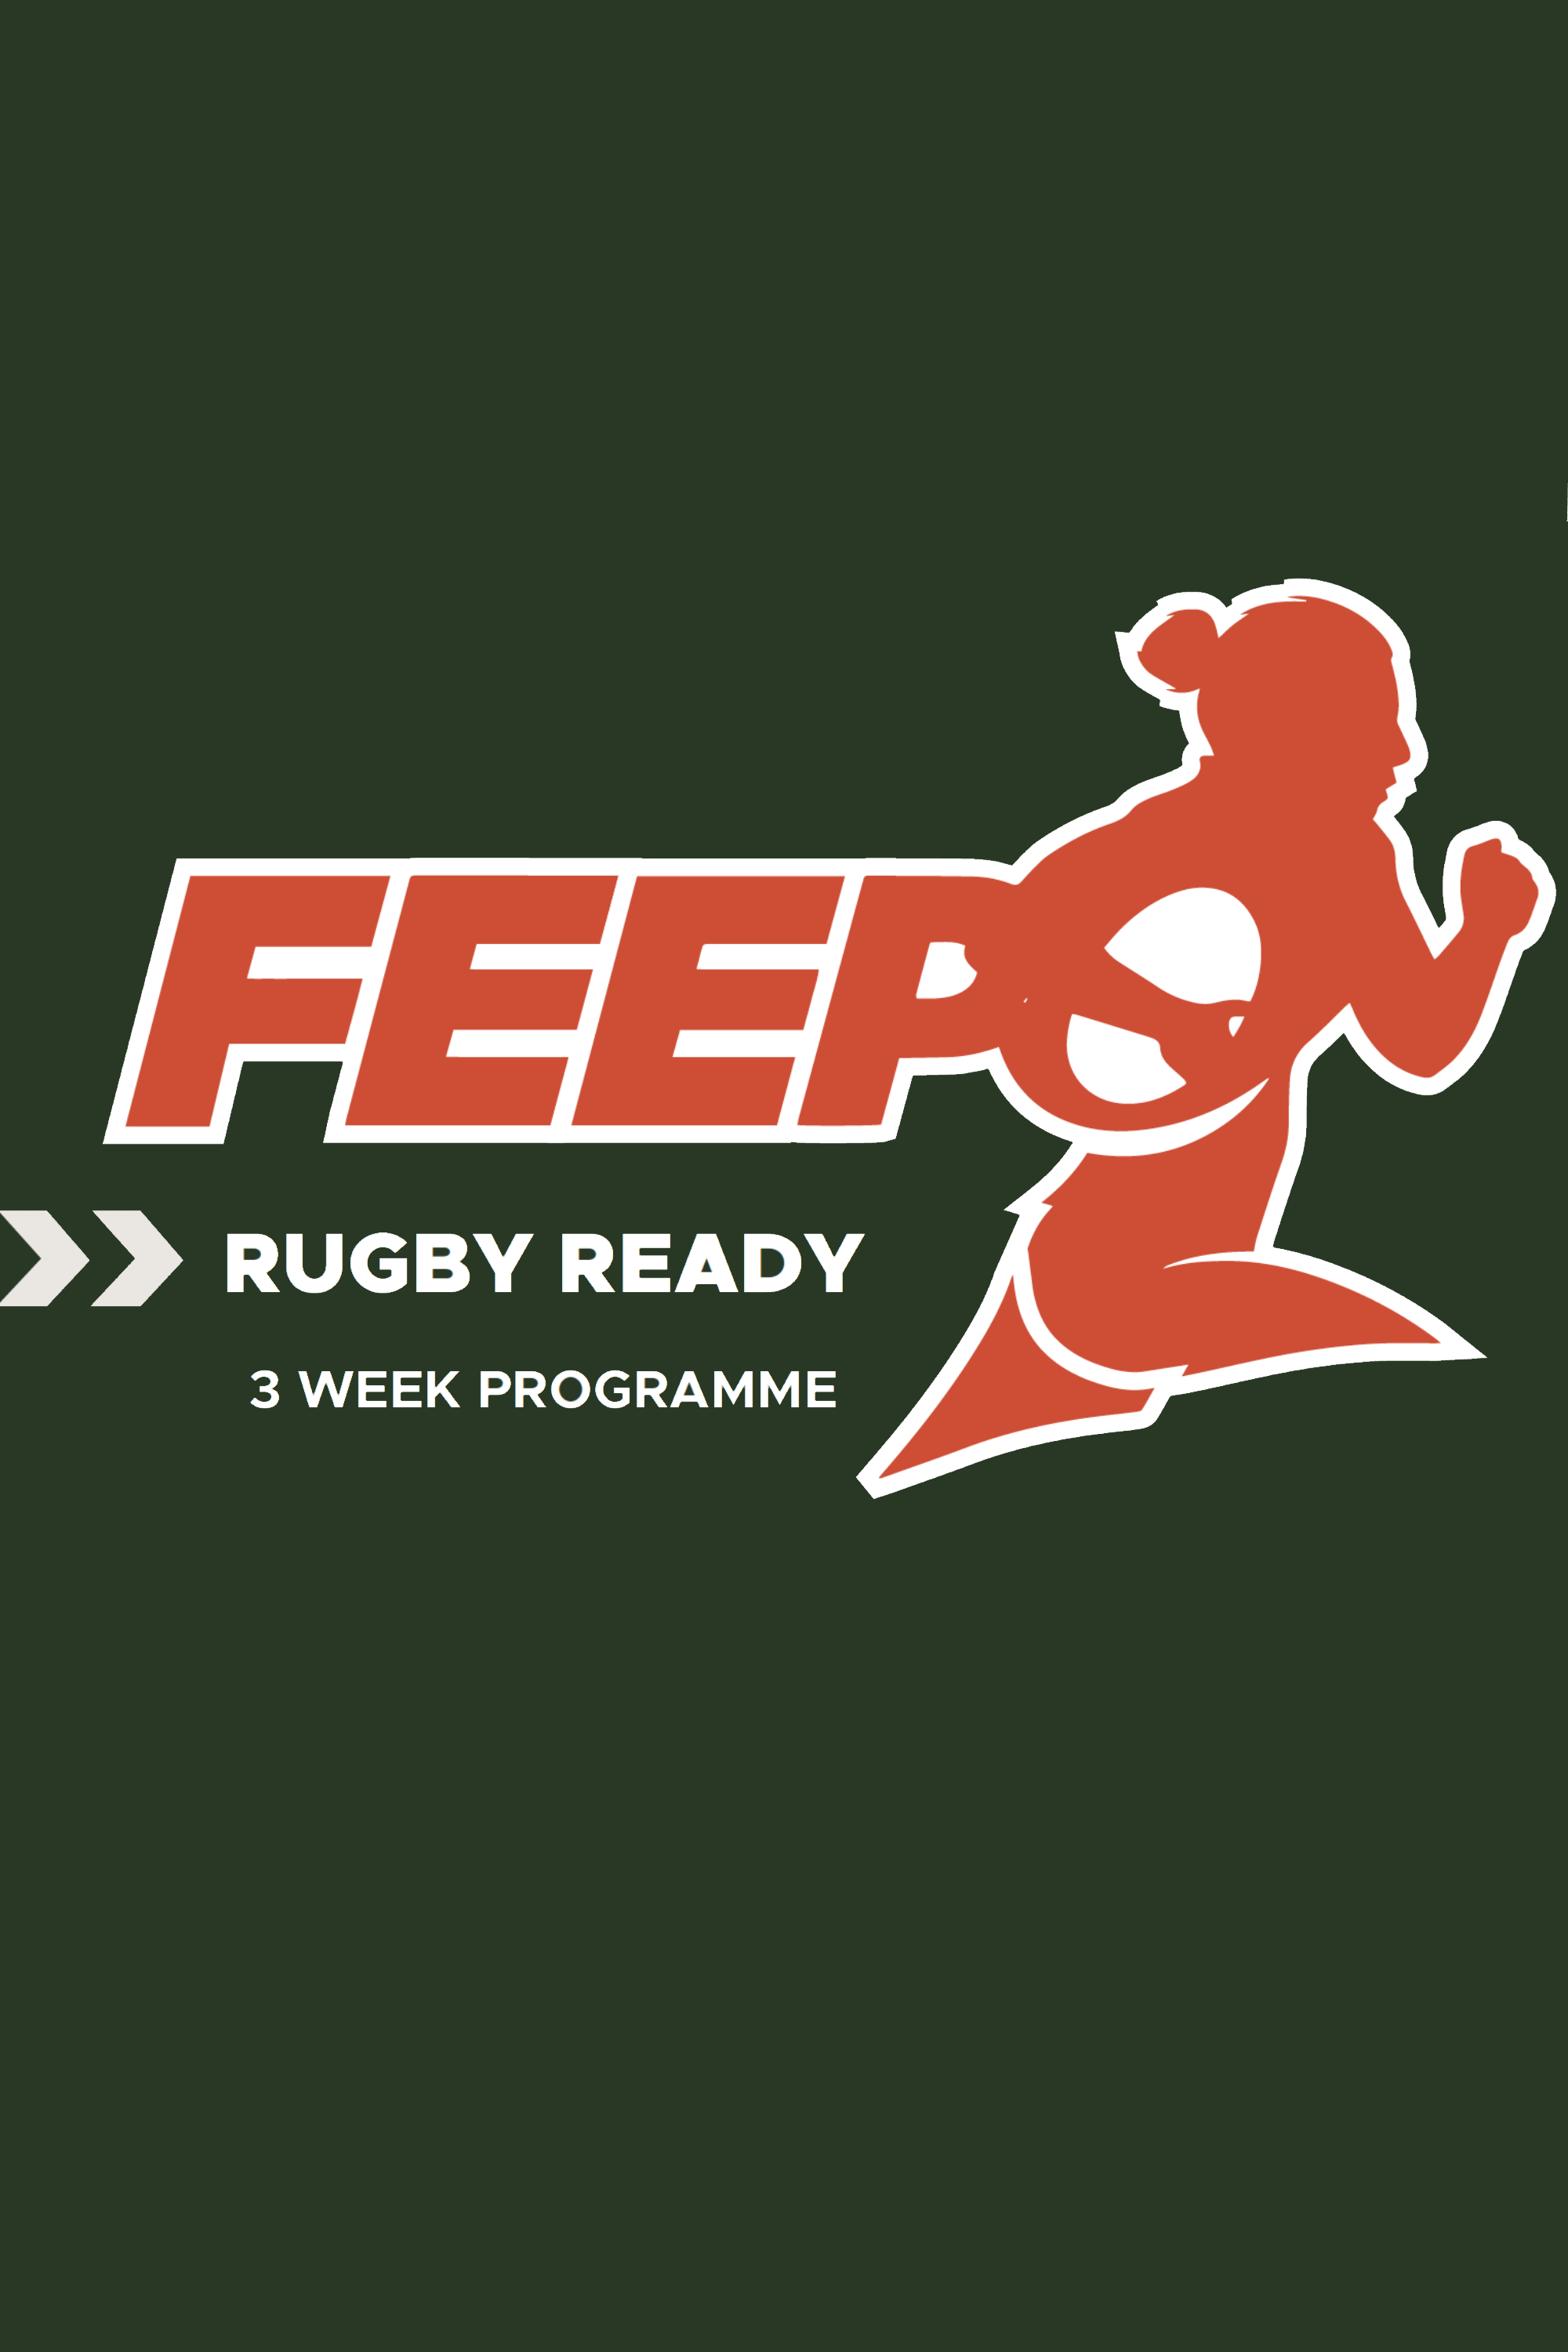 FEEPO Rugby Ready Programme